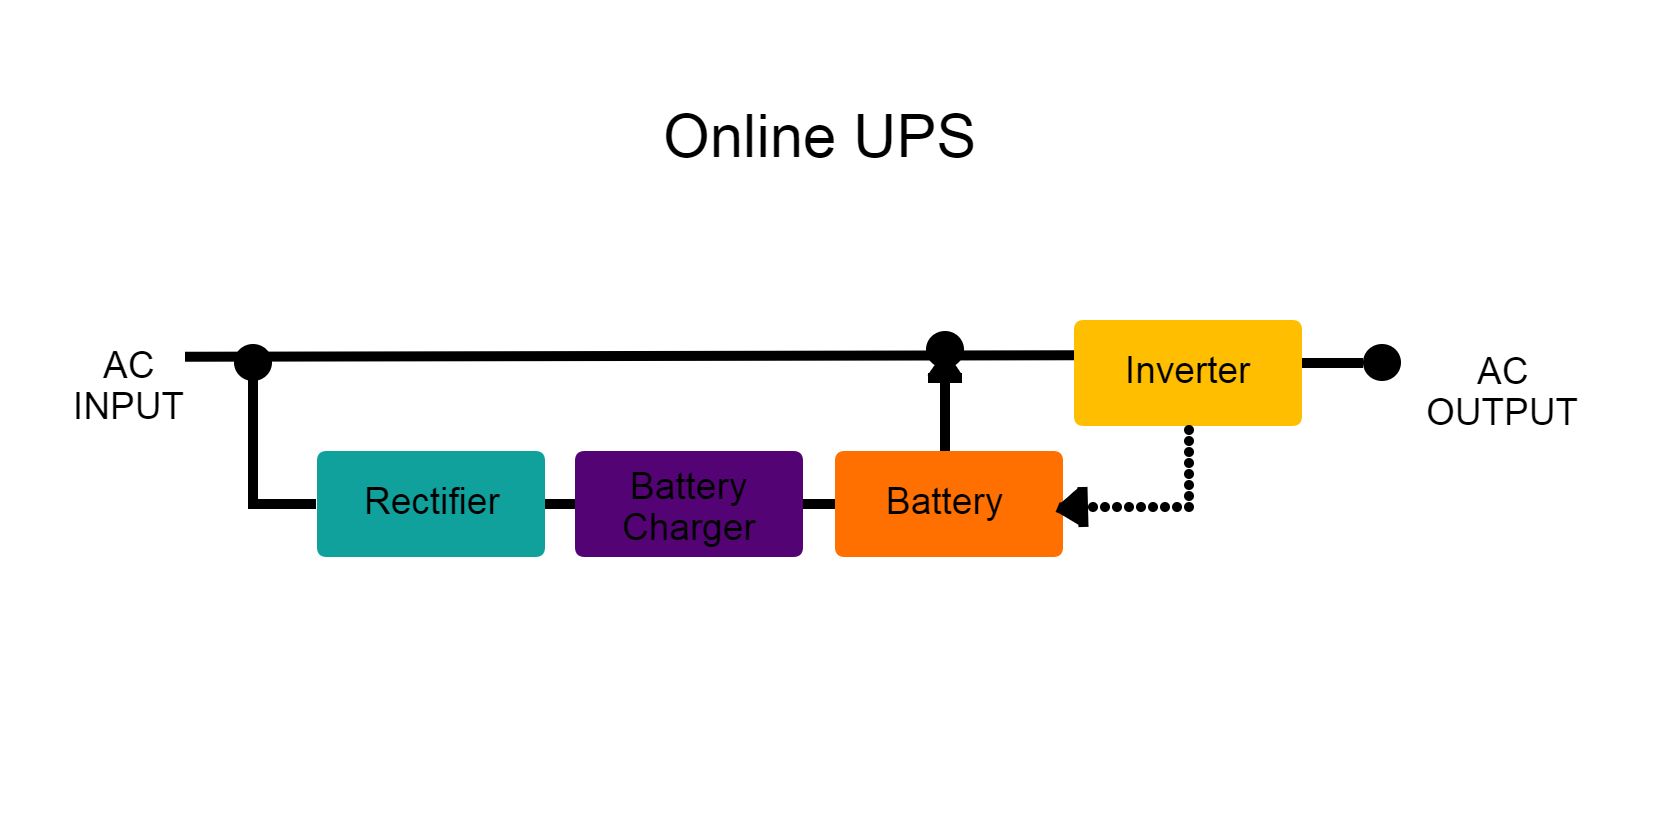 Illustration of online UPS components